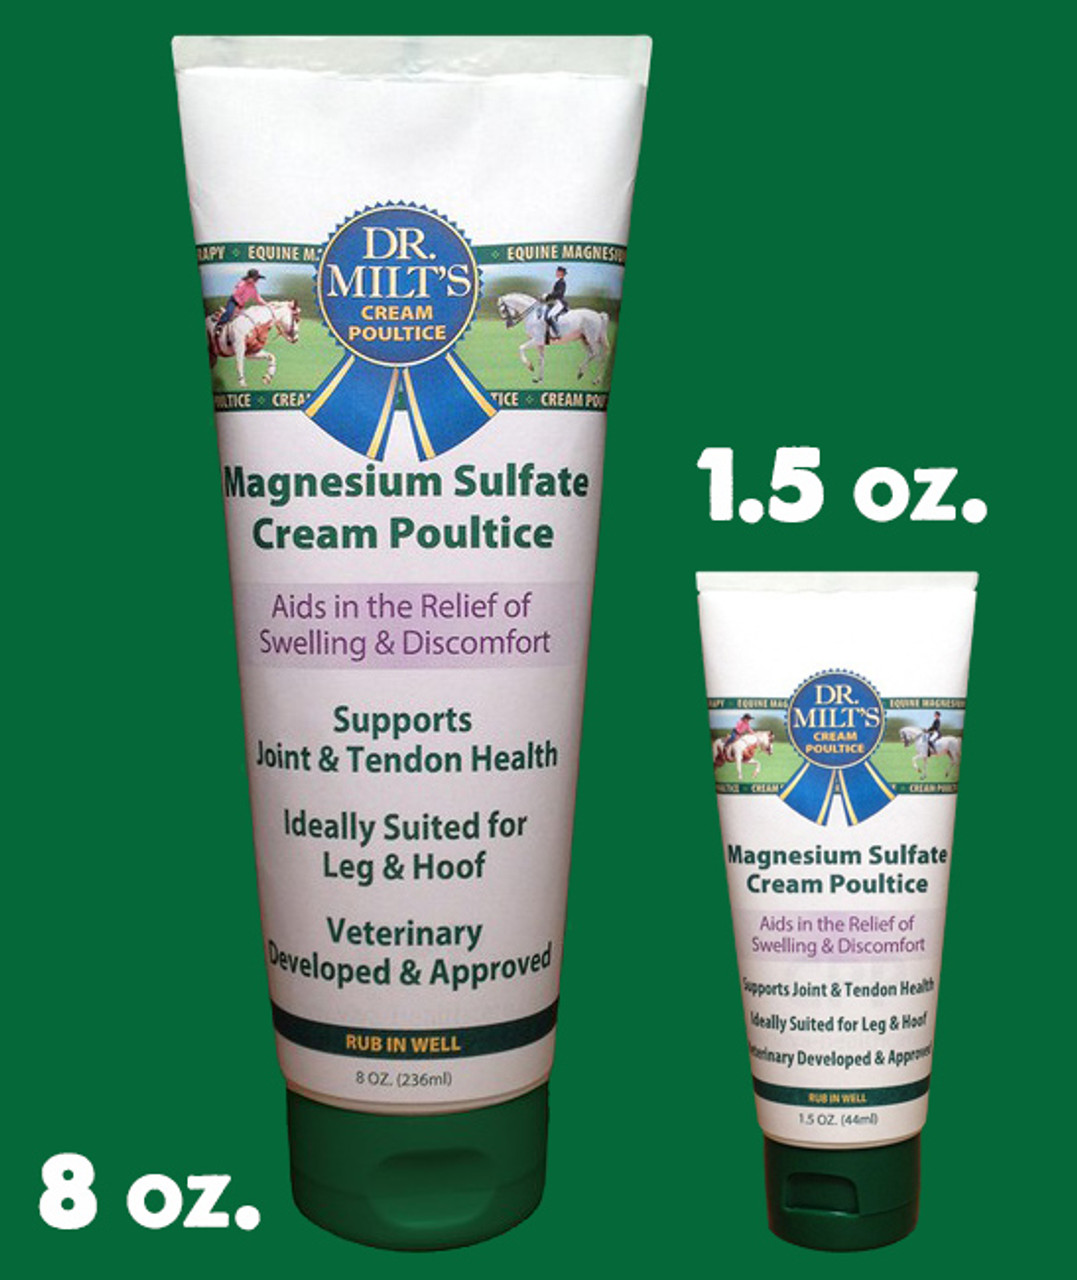 Dr. Milts Magnesium Sulfate Cream Poultice 1.5 oz.